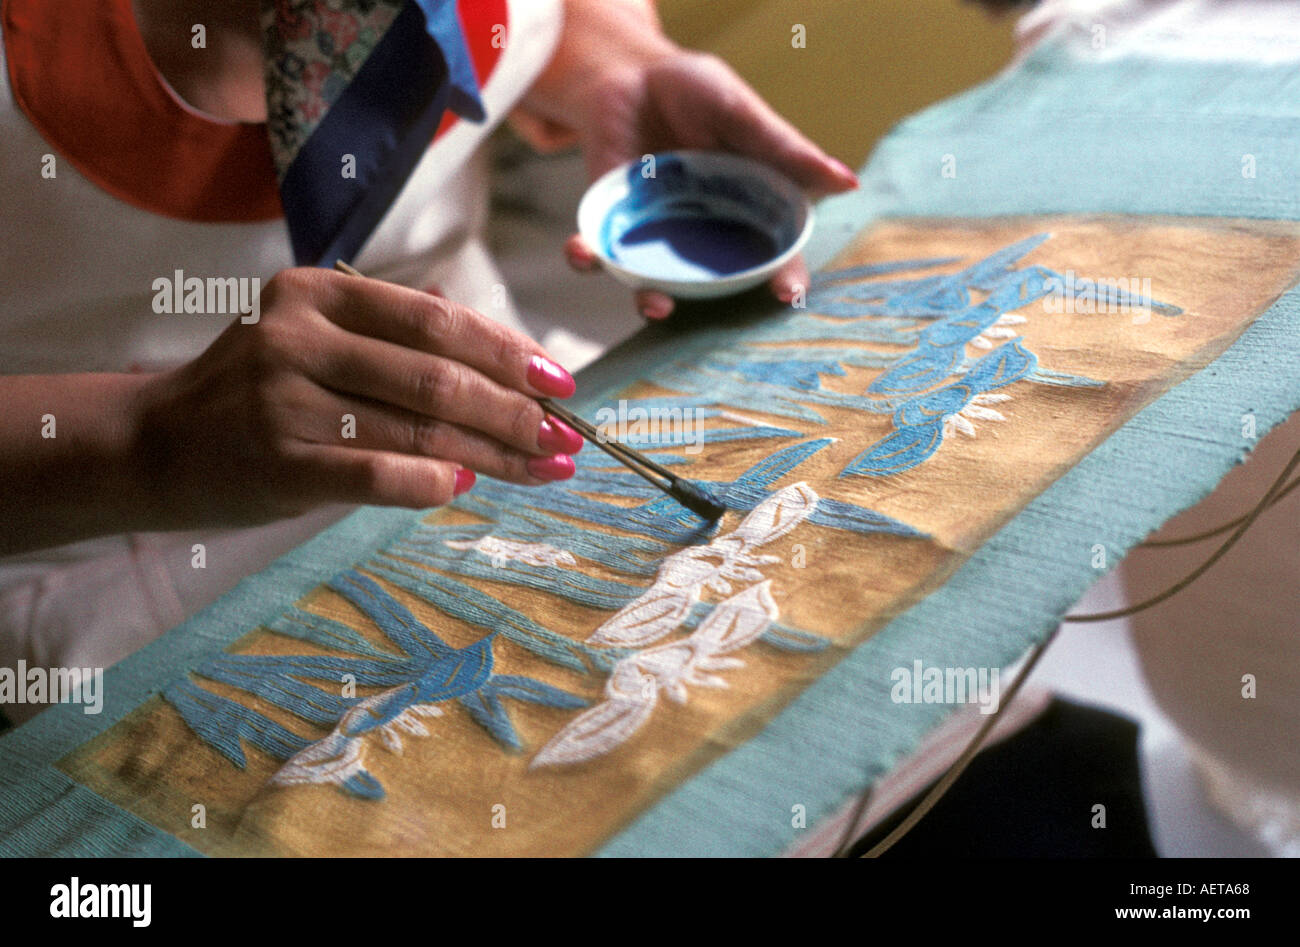 Okinawan craftswoman colouring a bingata wax resist dyed textile Stock Photo